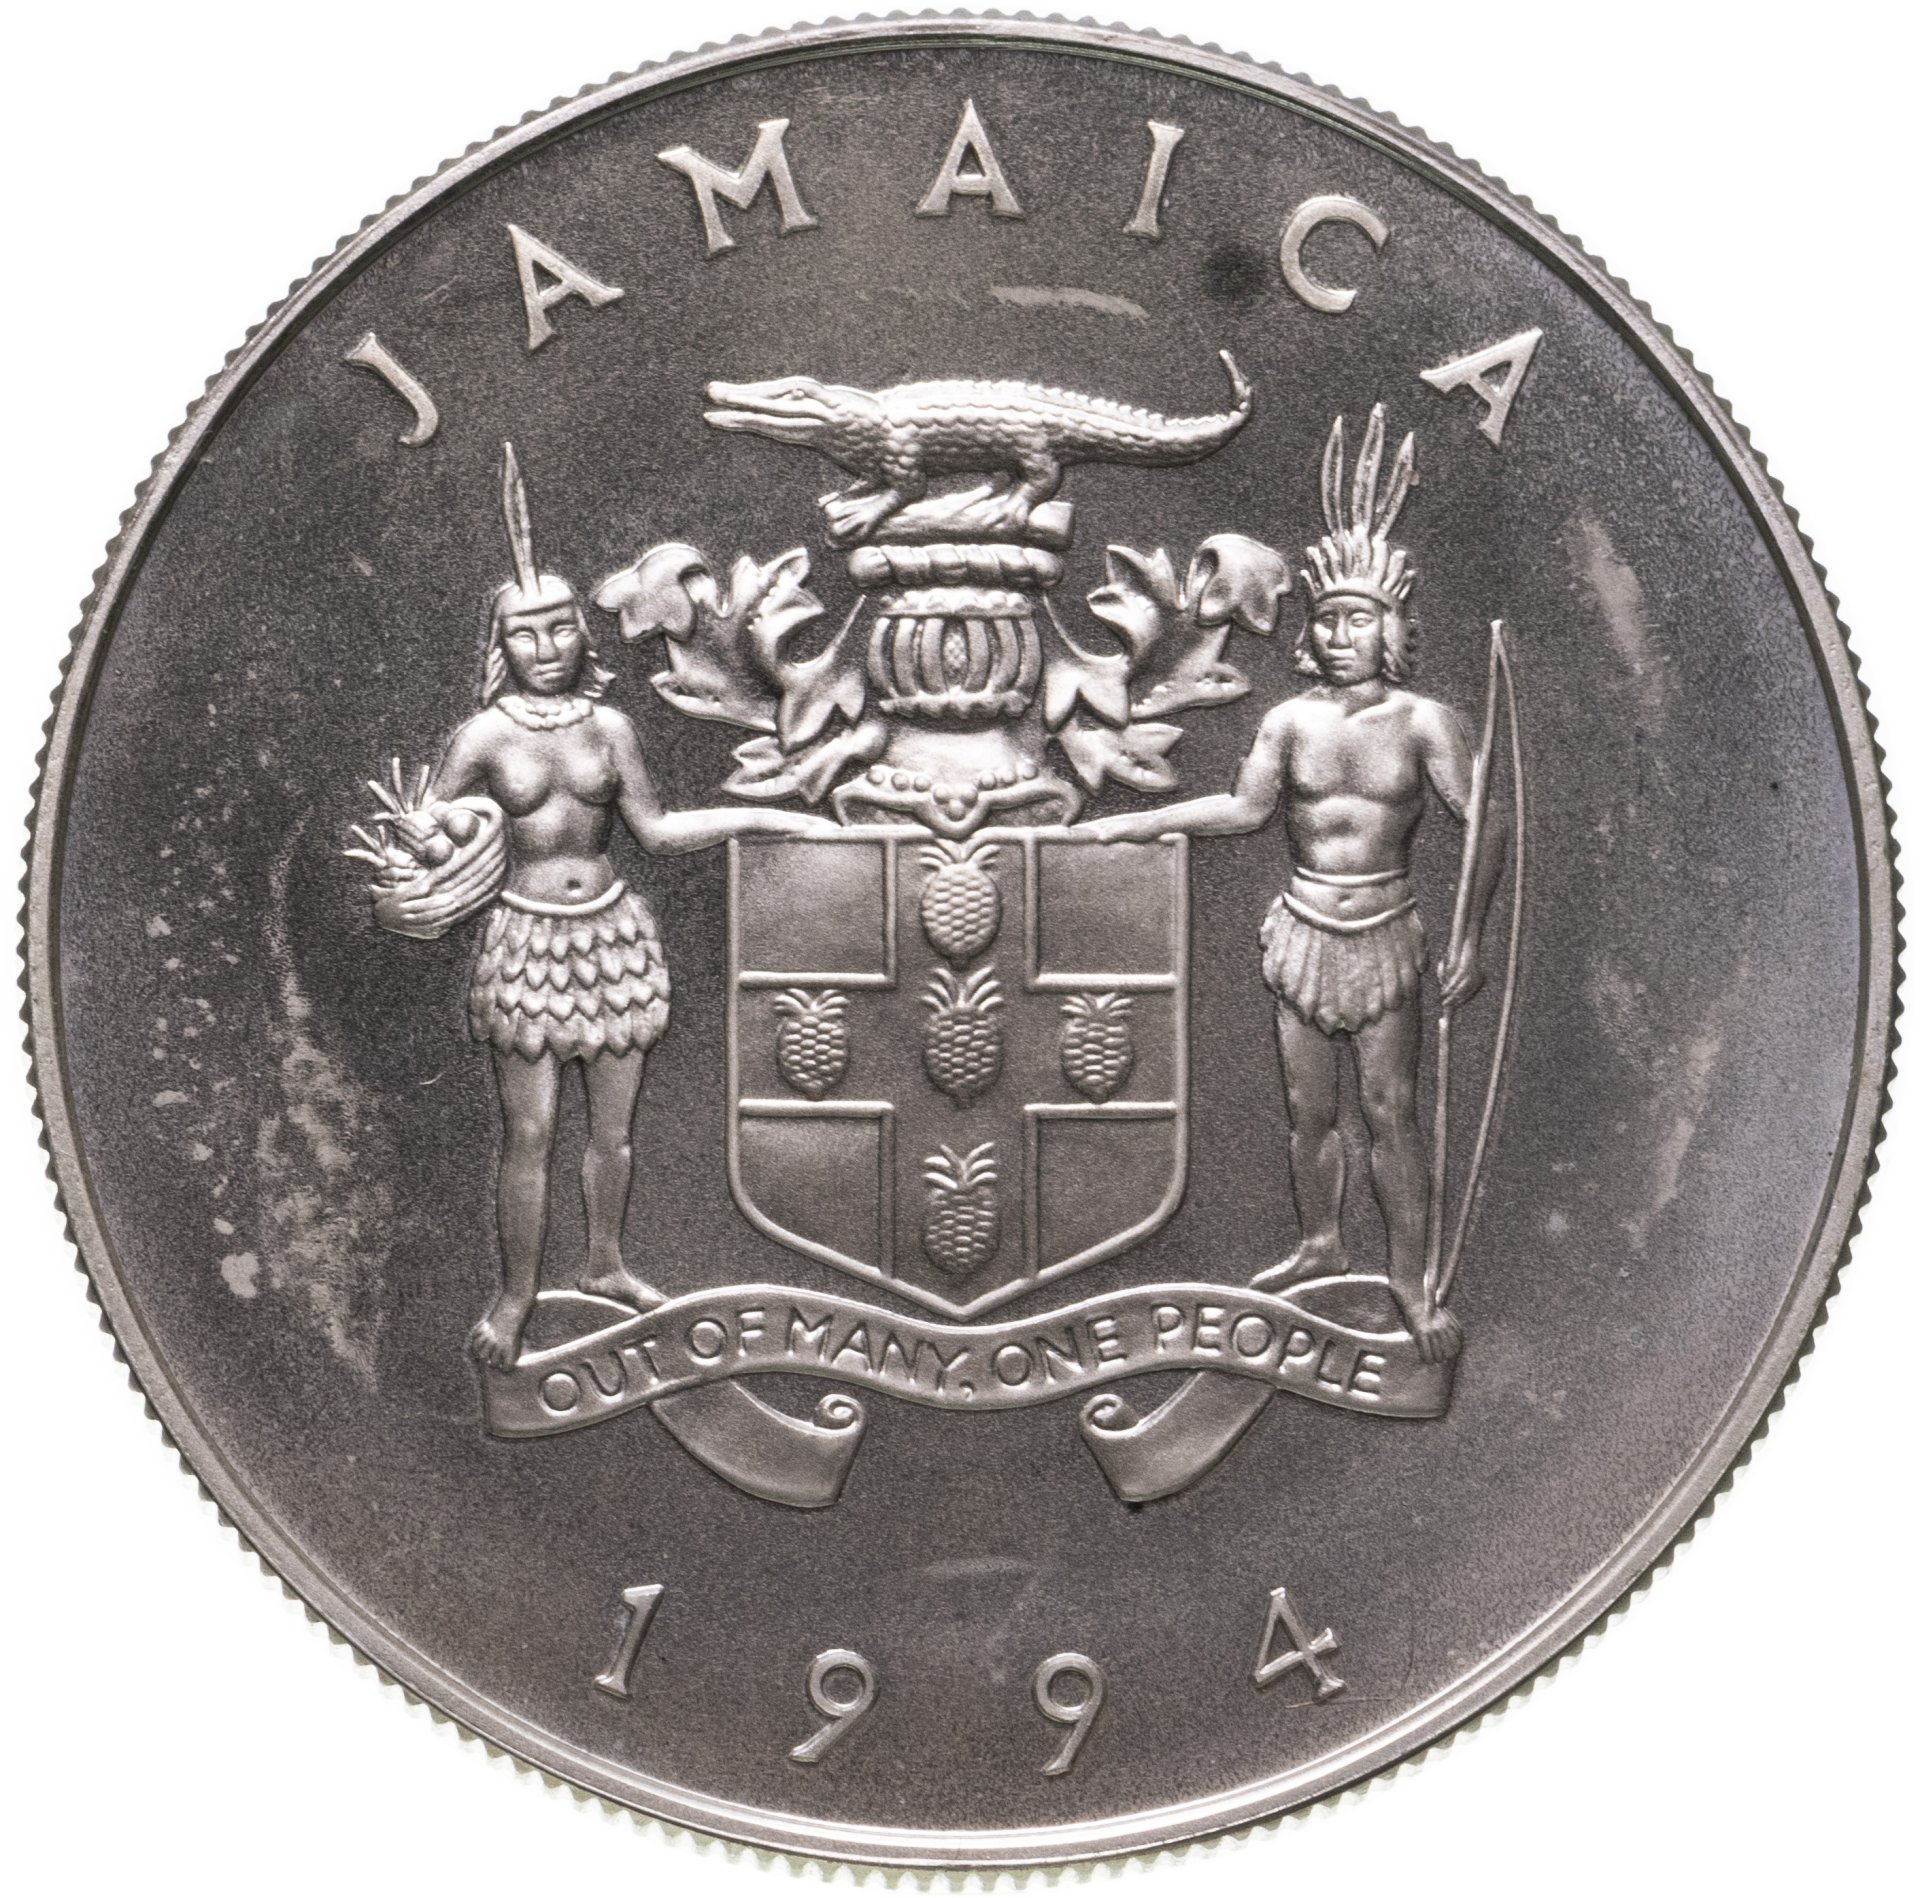 3 25 долларов. Ямайка 5 долларов, 1994-2018. Науру 10 долларов 1994 Королева. Бермуды 2 доллара, 1994 морской конек.